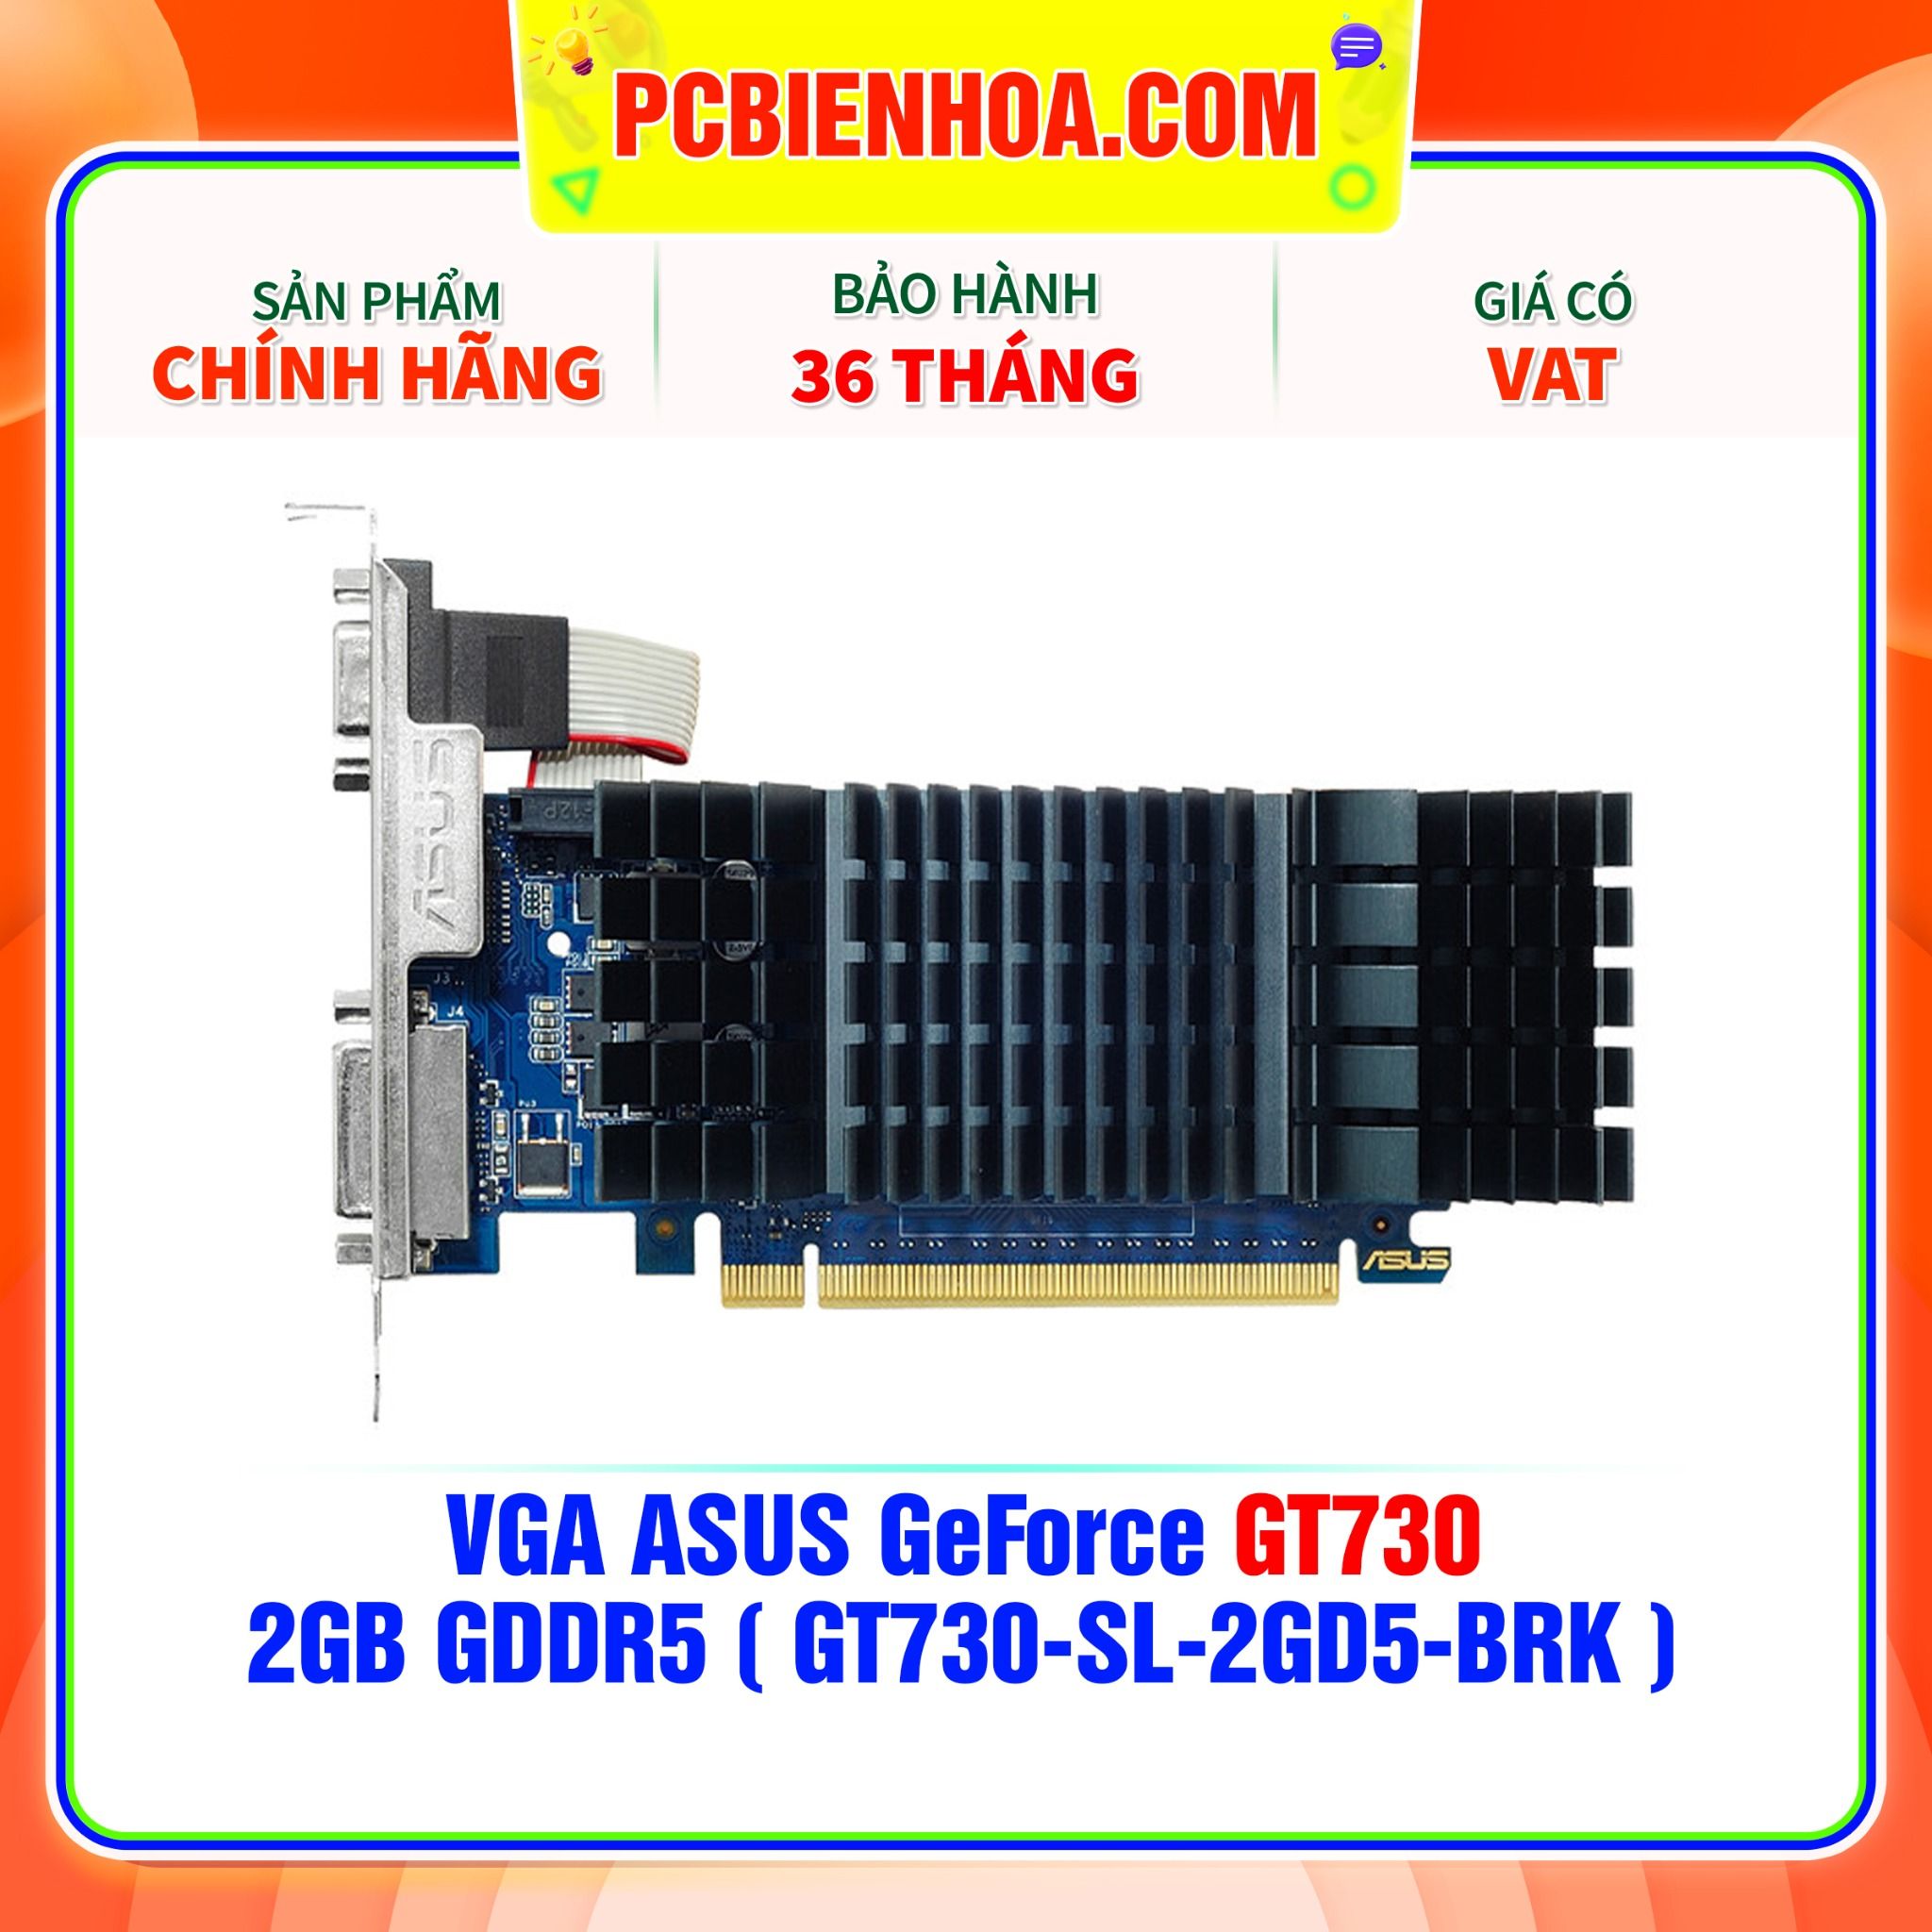  VGA ASUS GeForce GT730  2GB GDDR5 ( GT730-SL-2GD5-BRK ) 